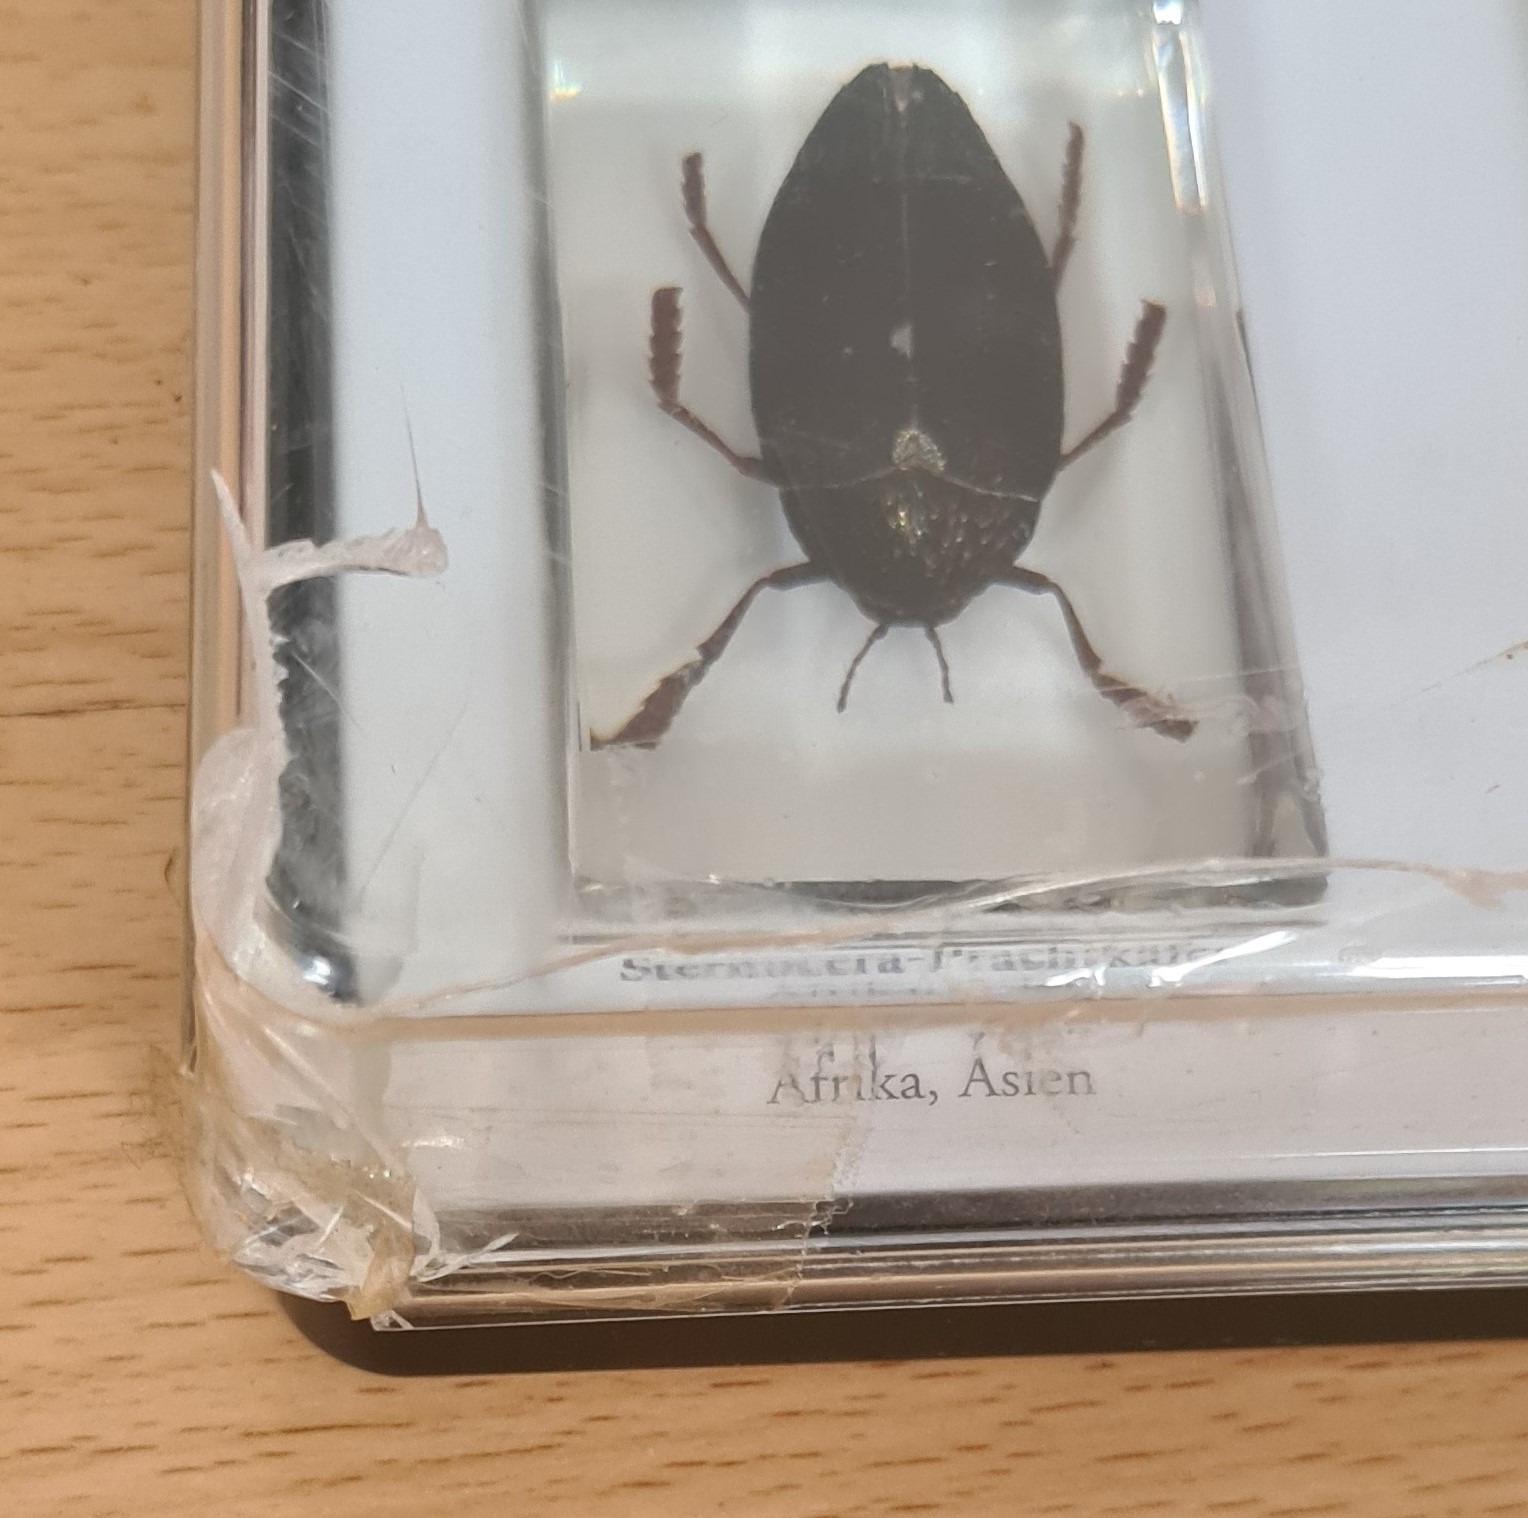 Mini BiesterEchte Spinnen-Käfer-InsektenAuswählbar aus privater Sammlung 